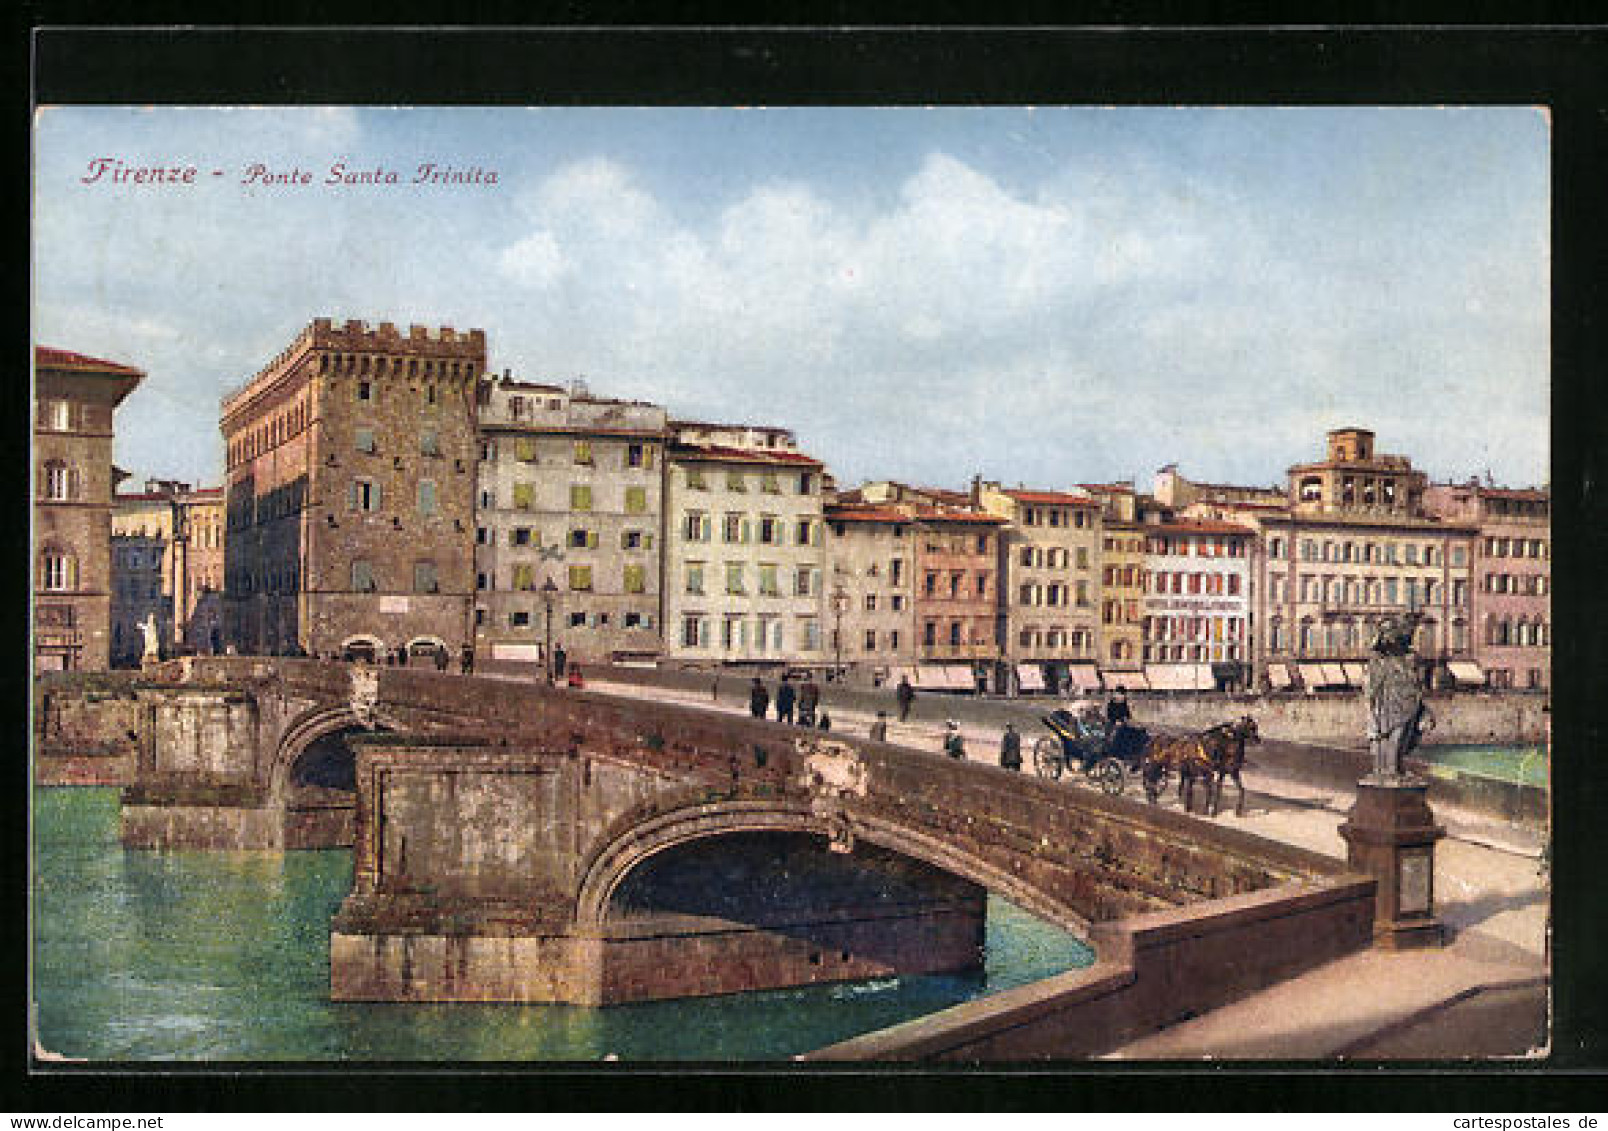 Cartolina Firenze, Ponte Santa Trinita  - Firenze (Florence)